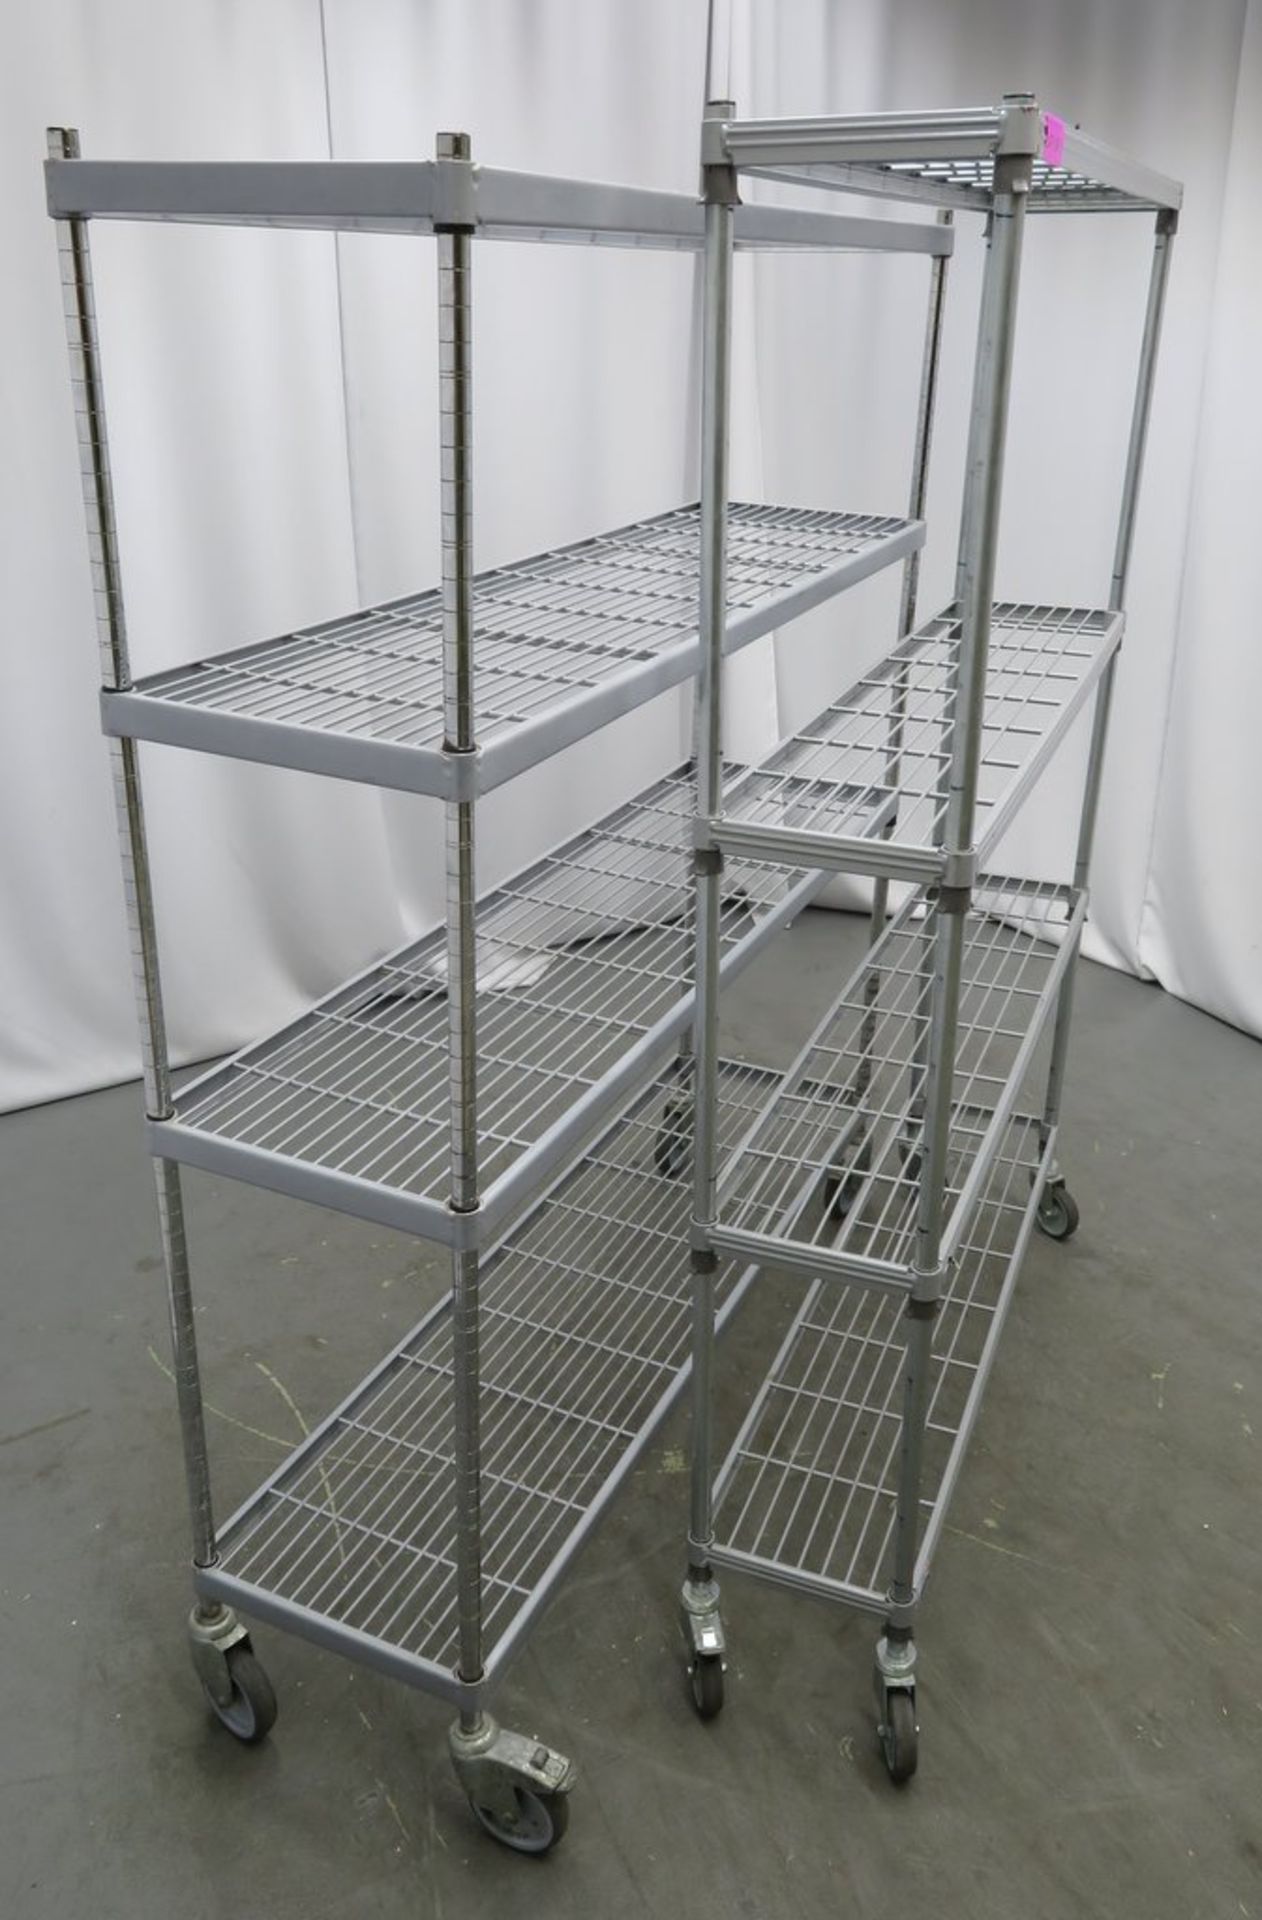 2x 4 Tier portable kitchen storage racks. 1550x400x1760mm & 1260x300x1800mm - Image 2 of 2